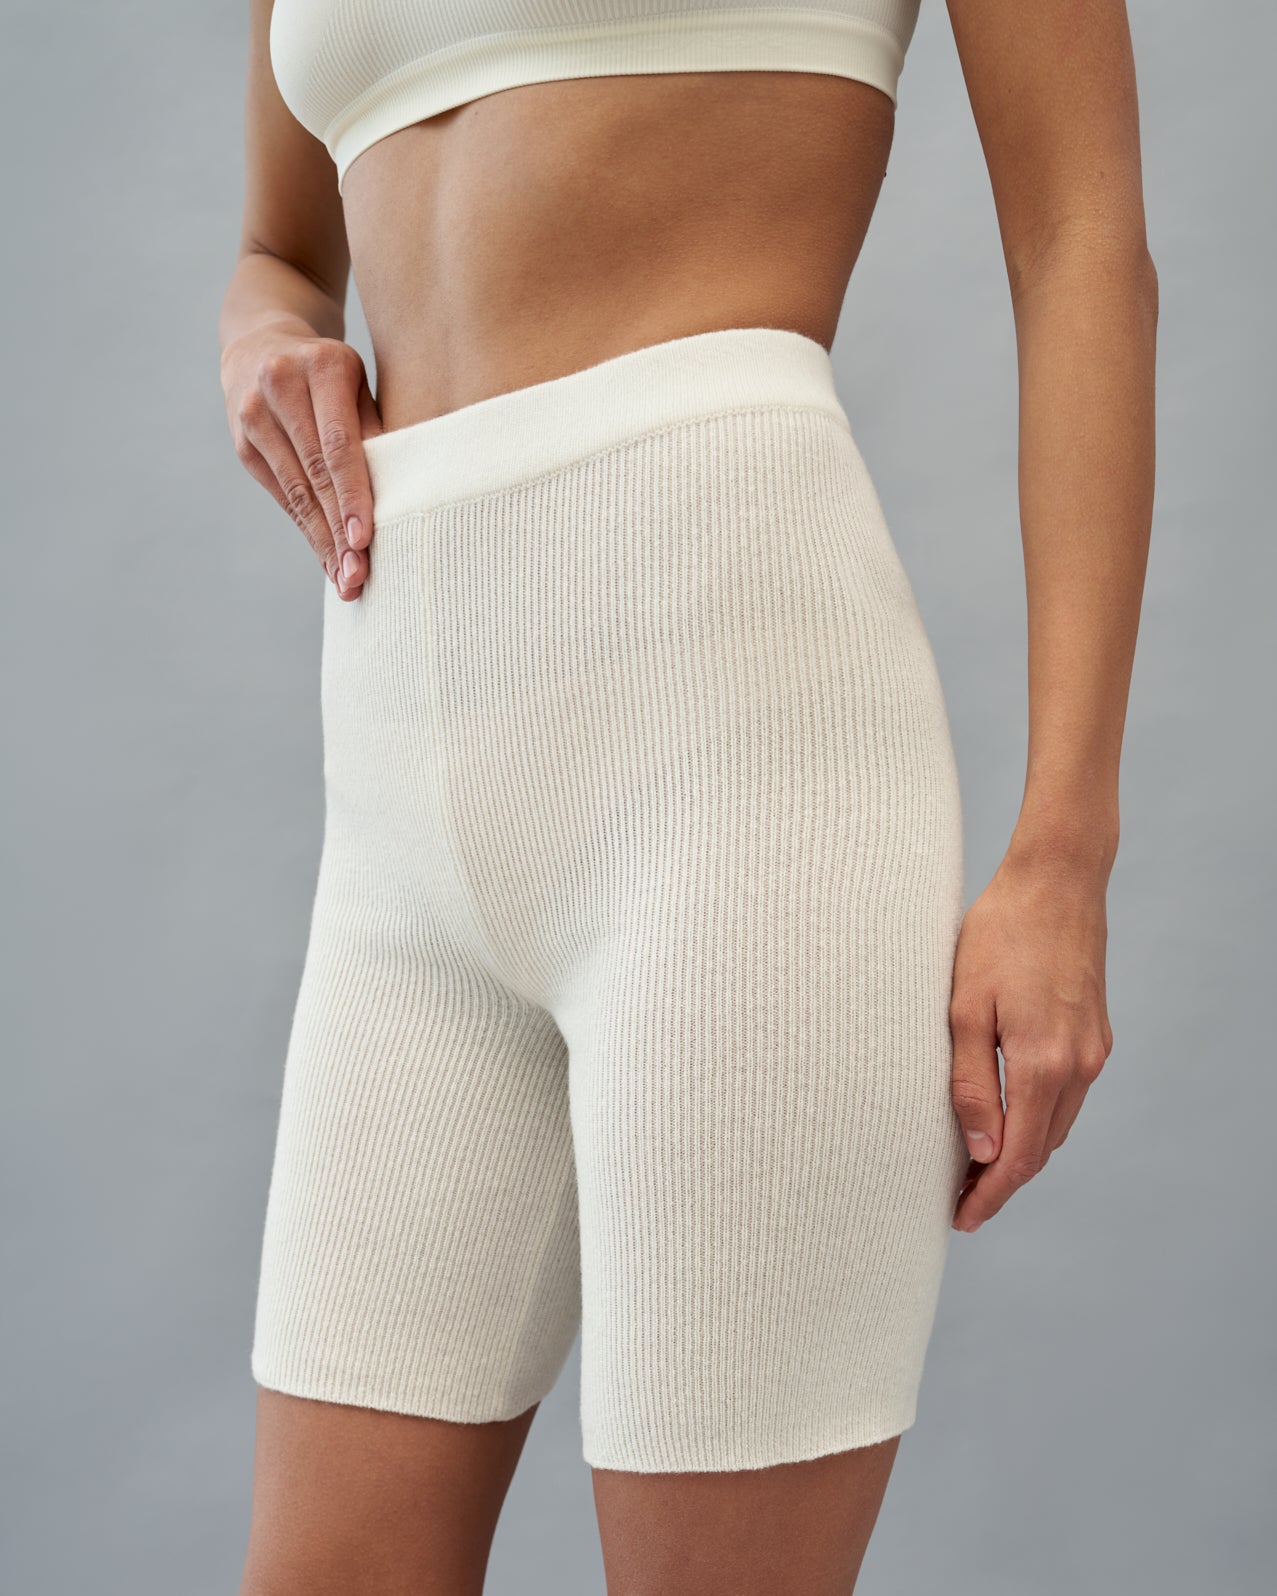 Milk knitted legging shorts with cashmere addition KATSURINA + JUL